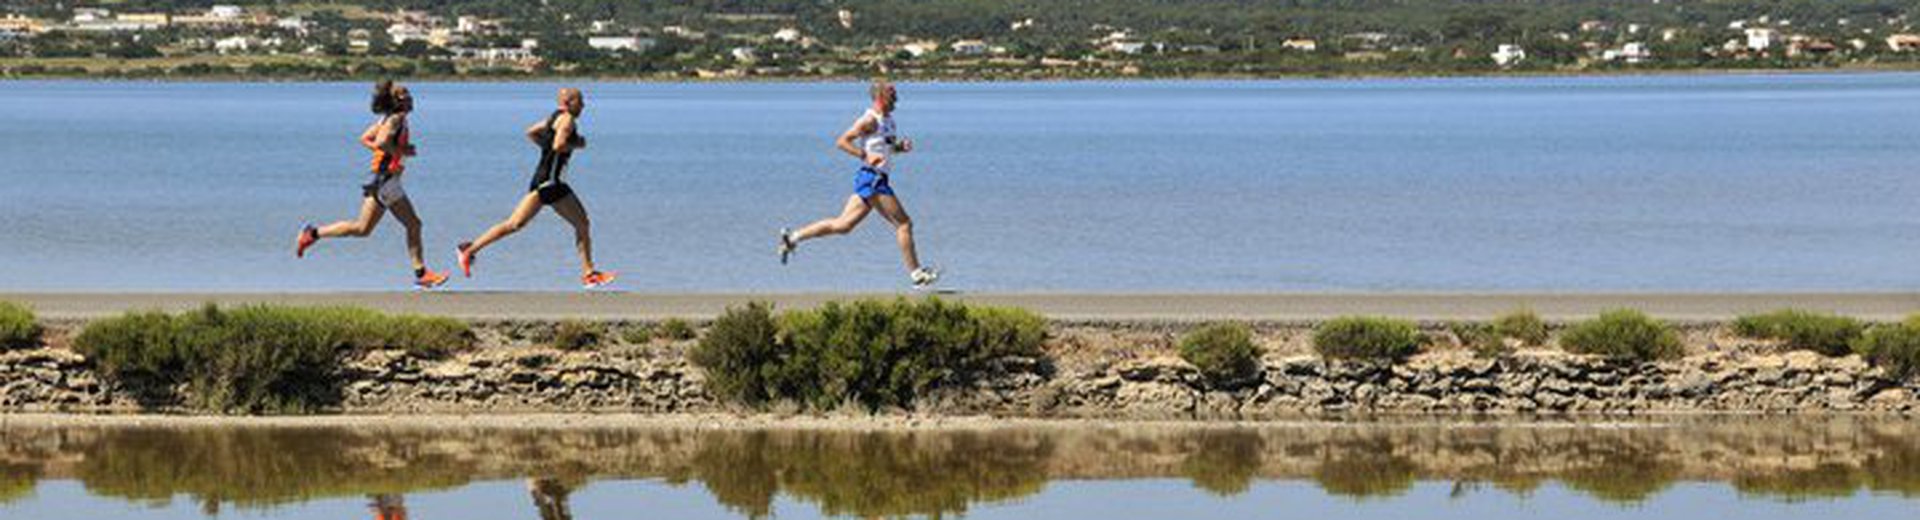 Formentera To Run